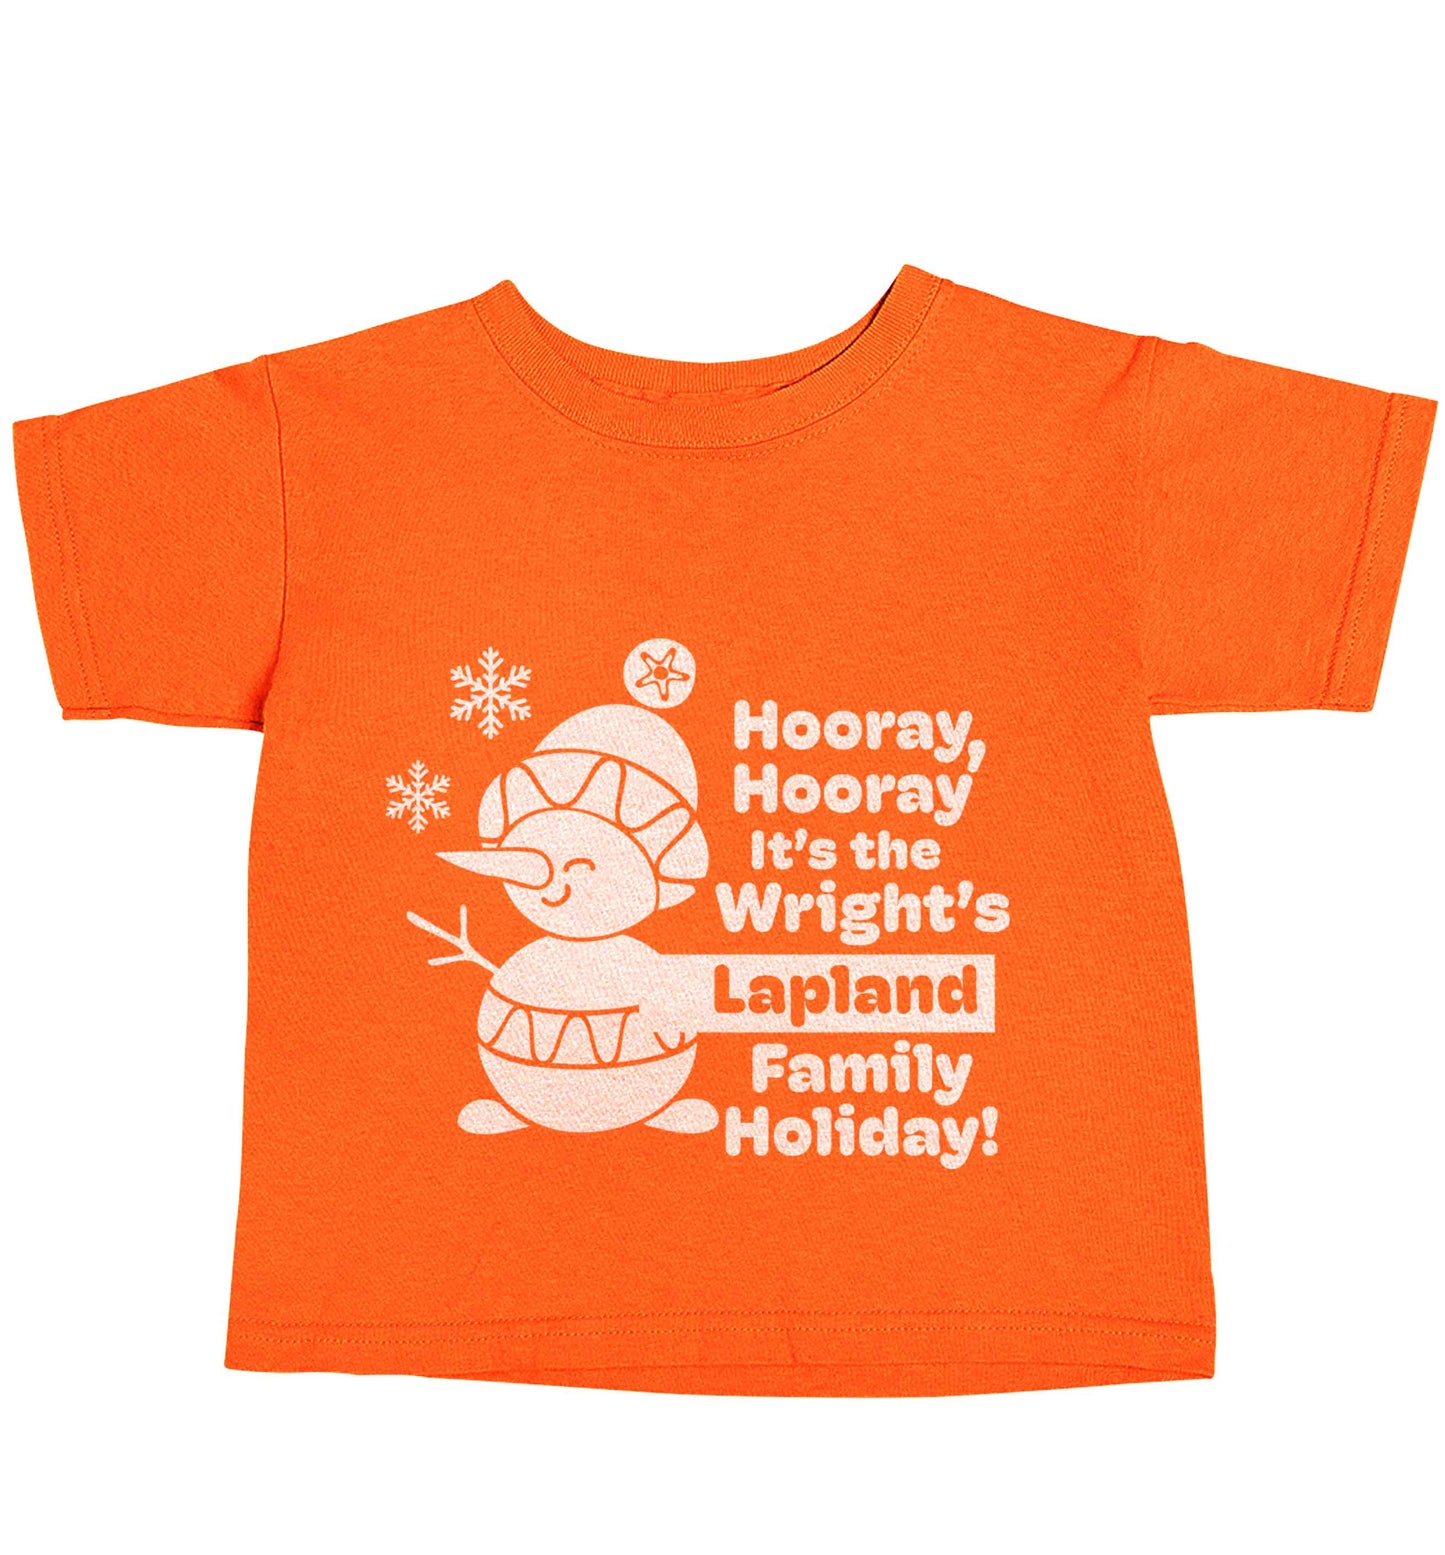 Hooray it's the personalised Lapland holiday! orange baby toddler Tshirt 2 Years